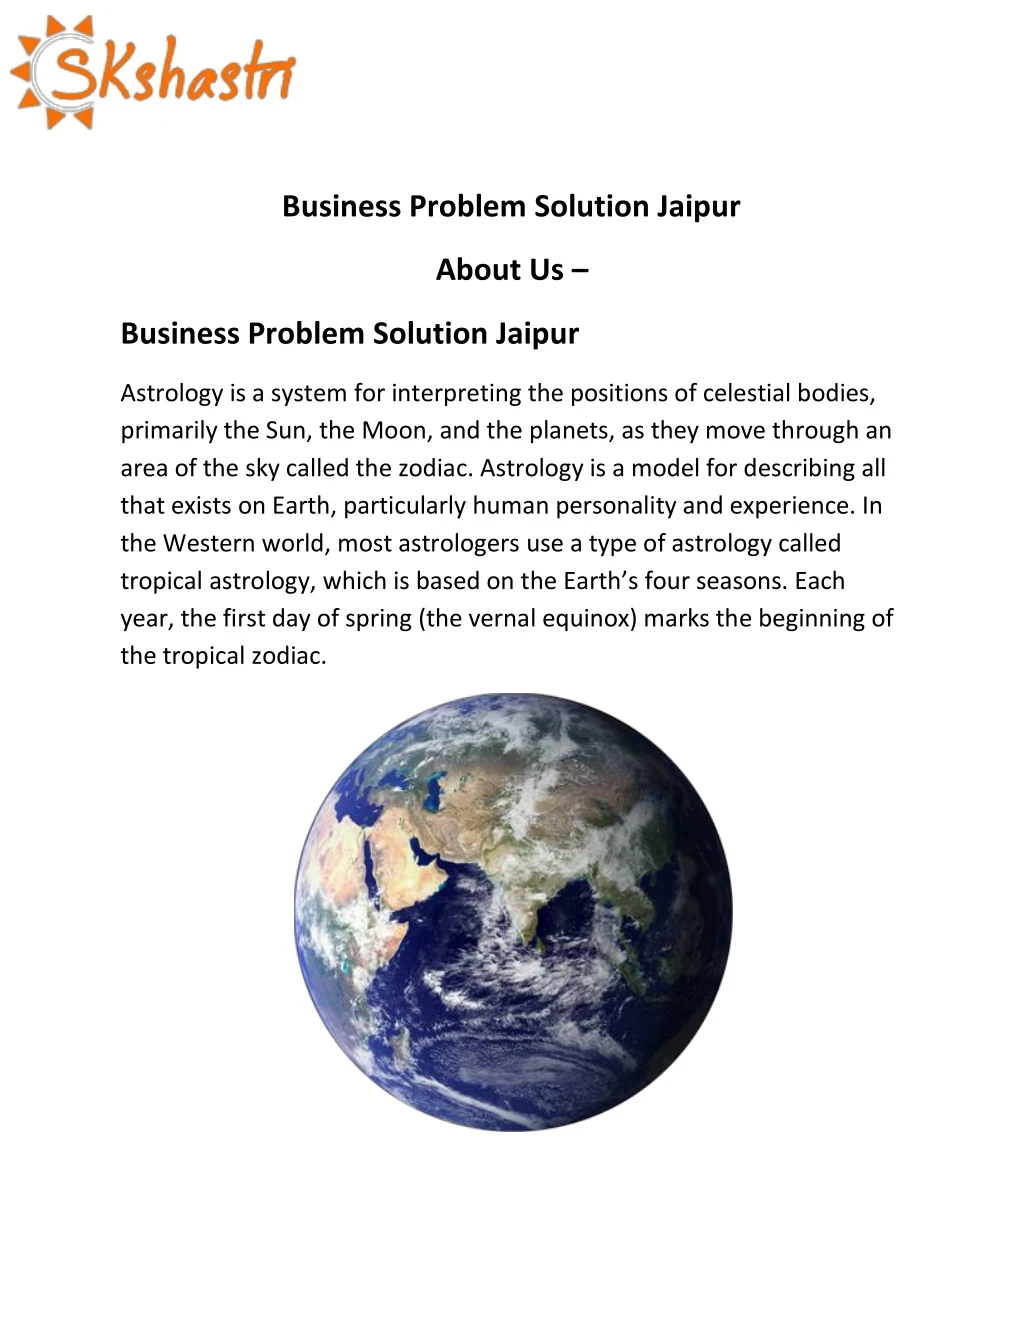 business problem solution jaipur